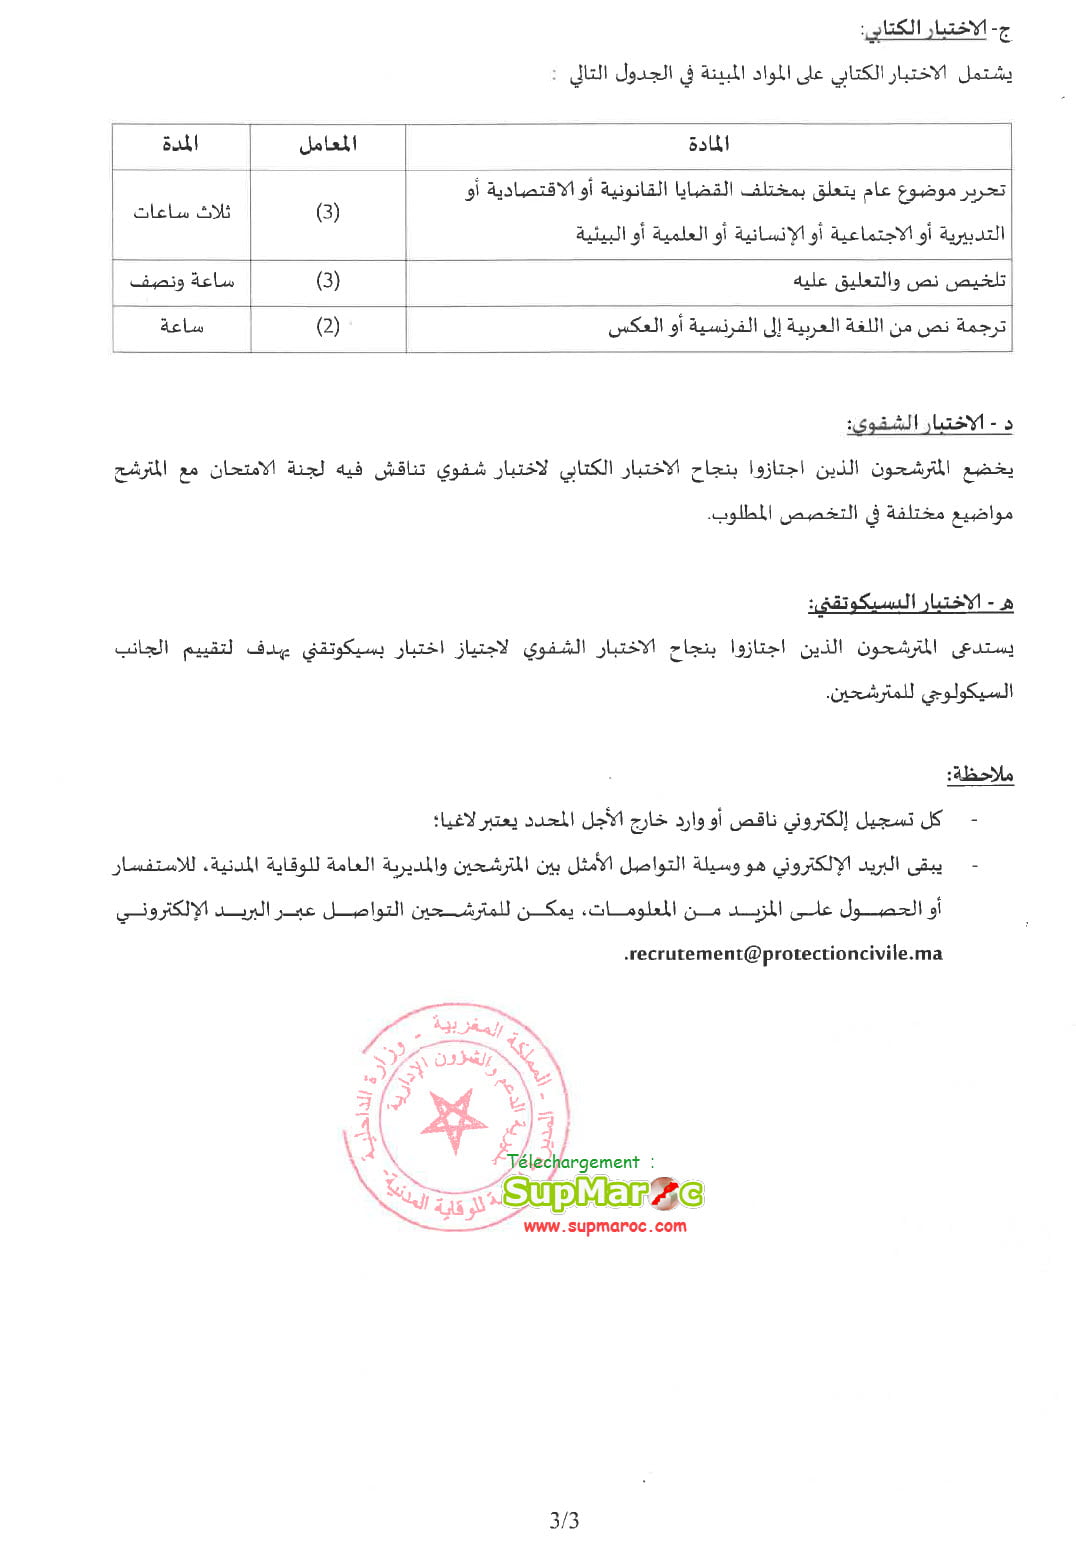 Protection Civile Maroc Recrutement 40 officiers 2023
المدرسة الوطنية للوقاية المدنية
 2023 مباراة توظيف 40  ضابط